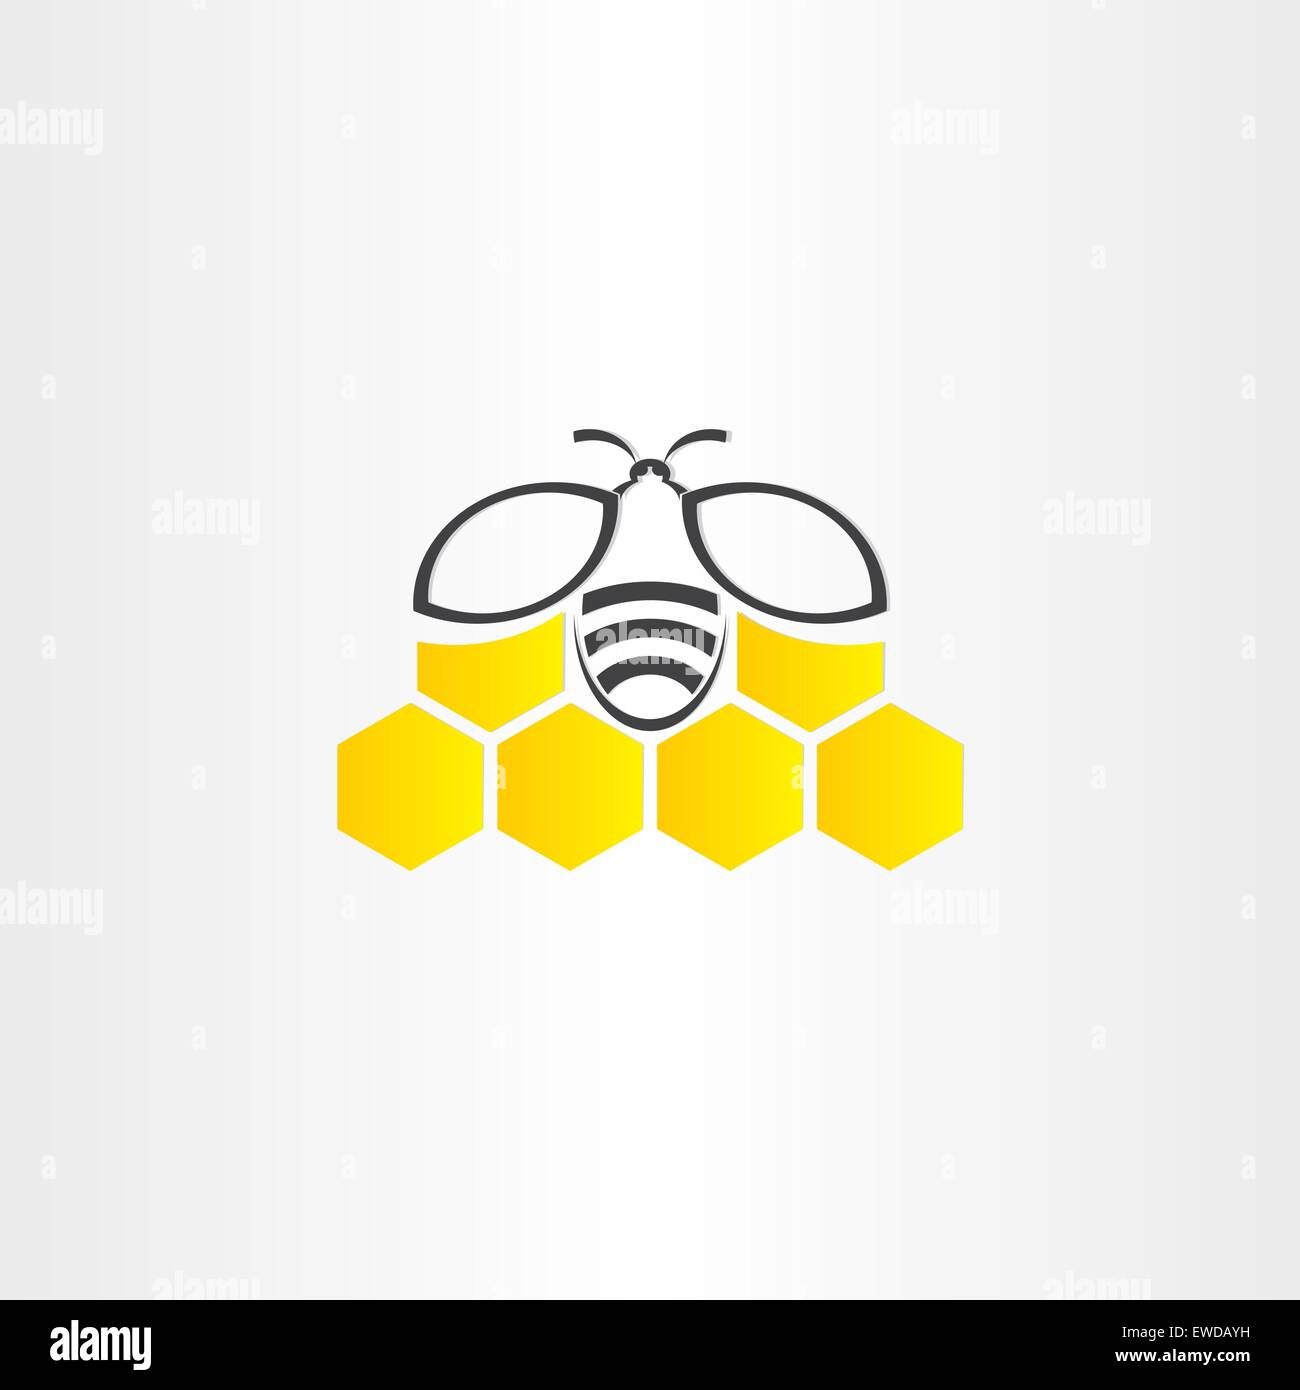 honeycomb and bee symbol design Stock Vector